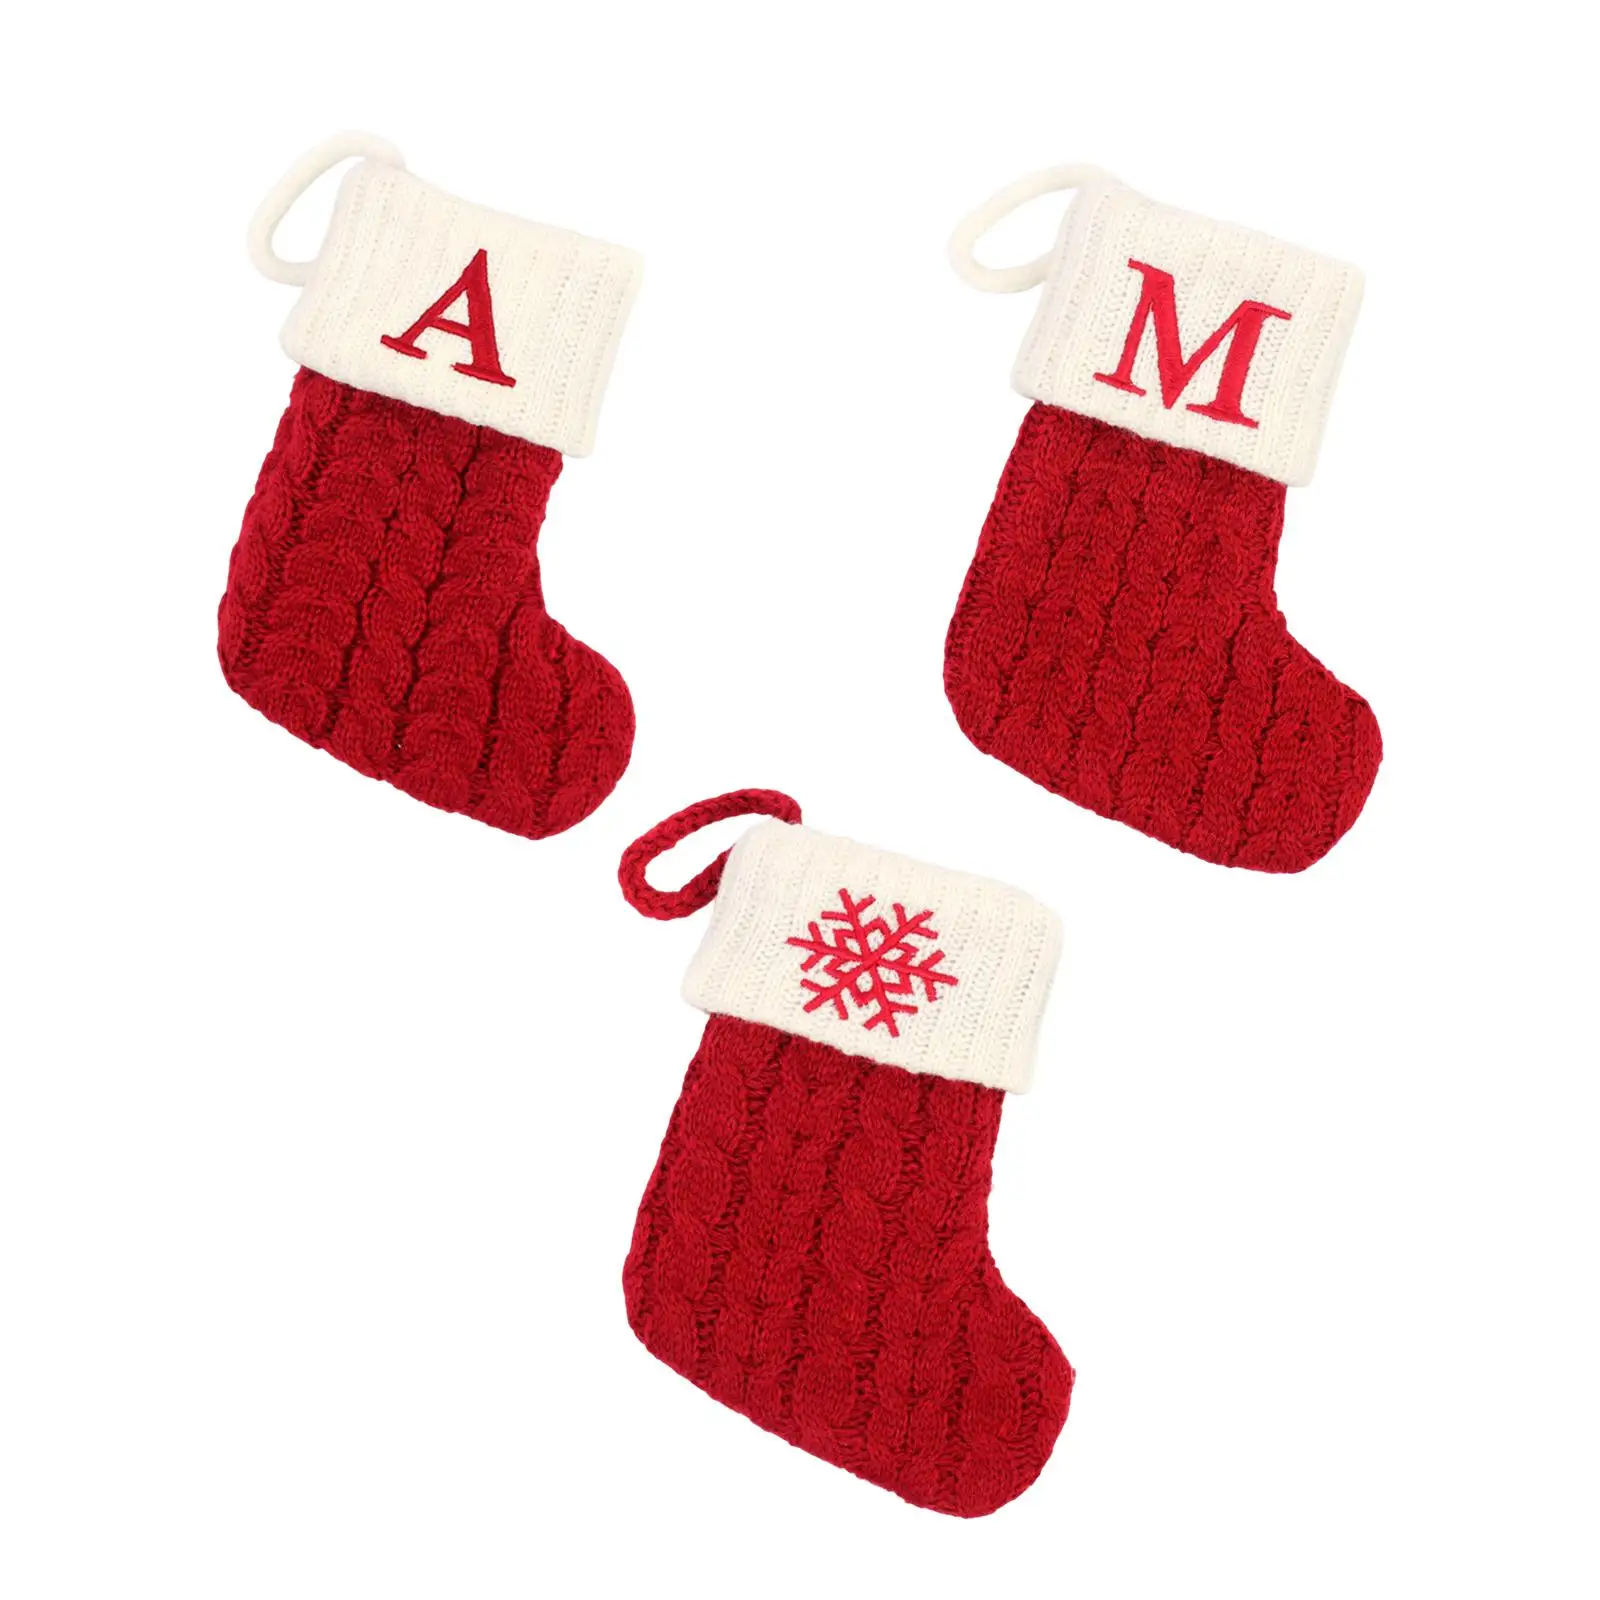 Hanging Knit Christmas Stocking Candy Gift Bag Crochet Cable Knit Christmas Stockings Christmas Socks for Garden Xmas Tree Decor